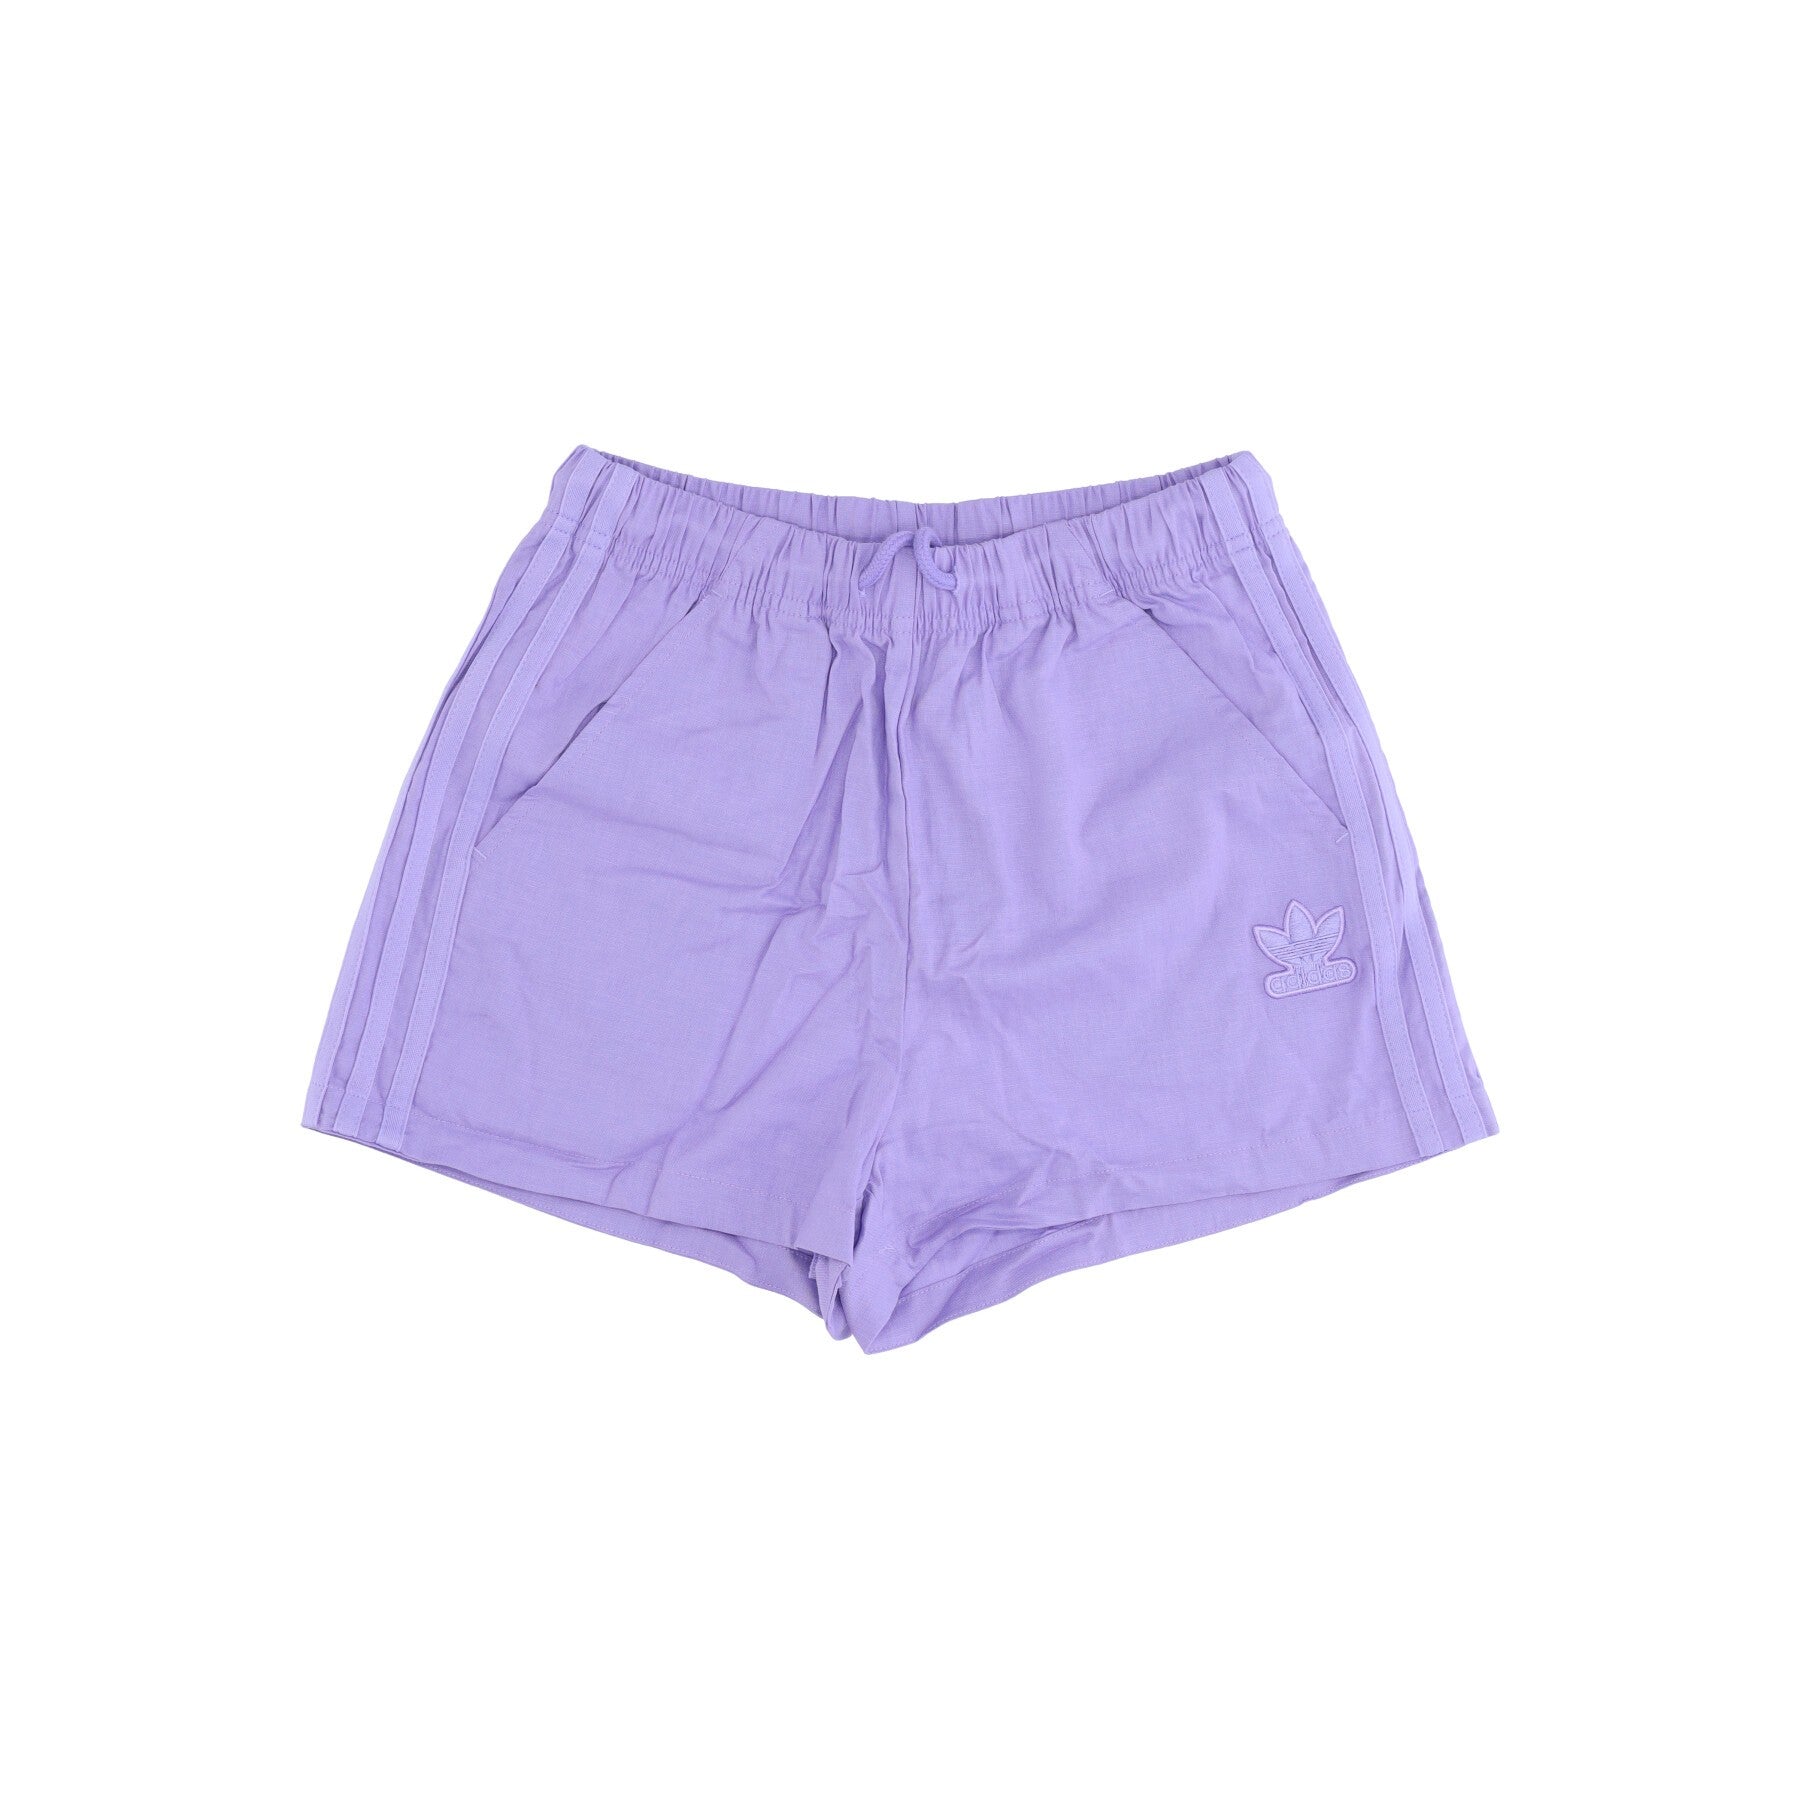 Adidas, Pantaloncino Donna Linen Shorts, Light Purple